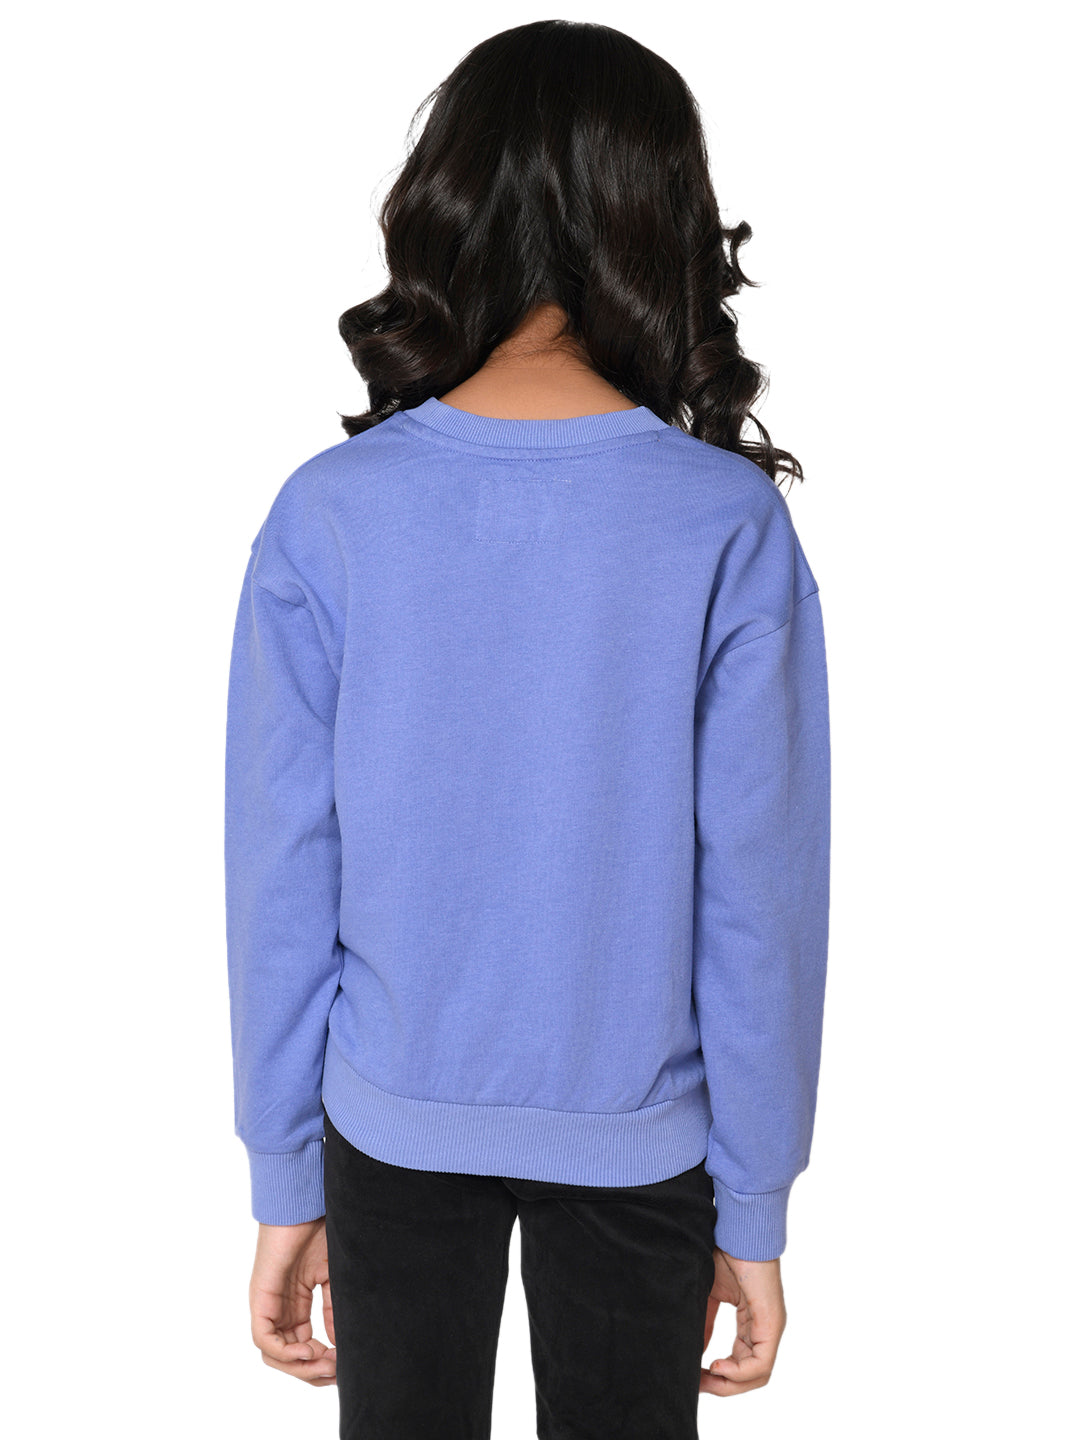 Spunkies Girls Sweatshirt-Blue